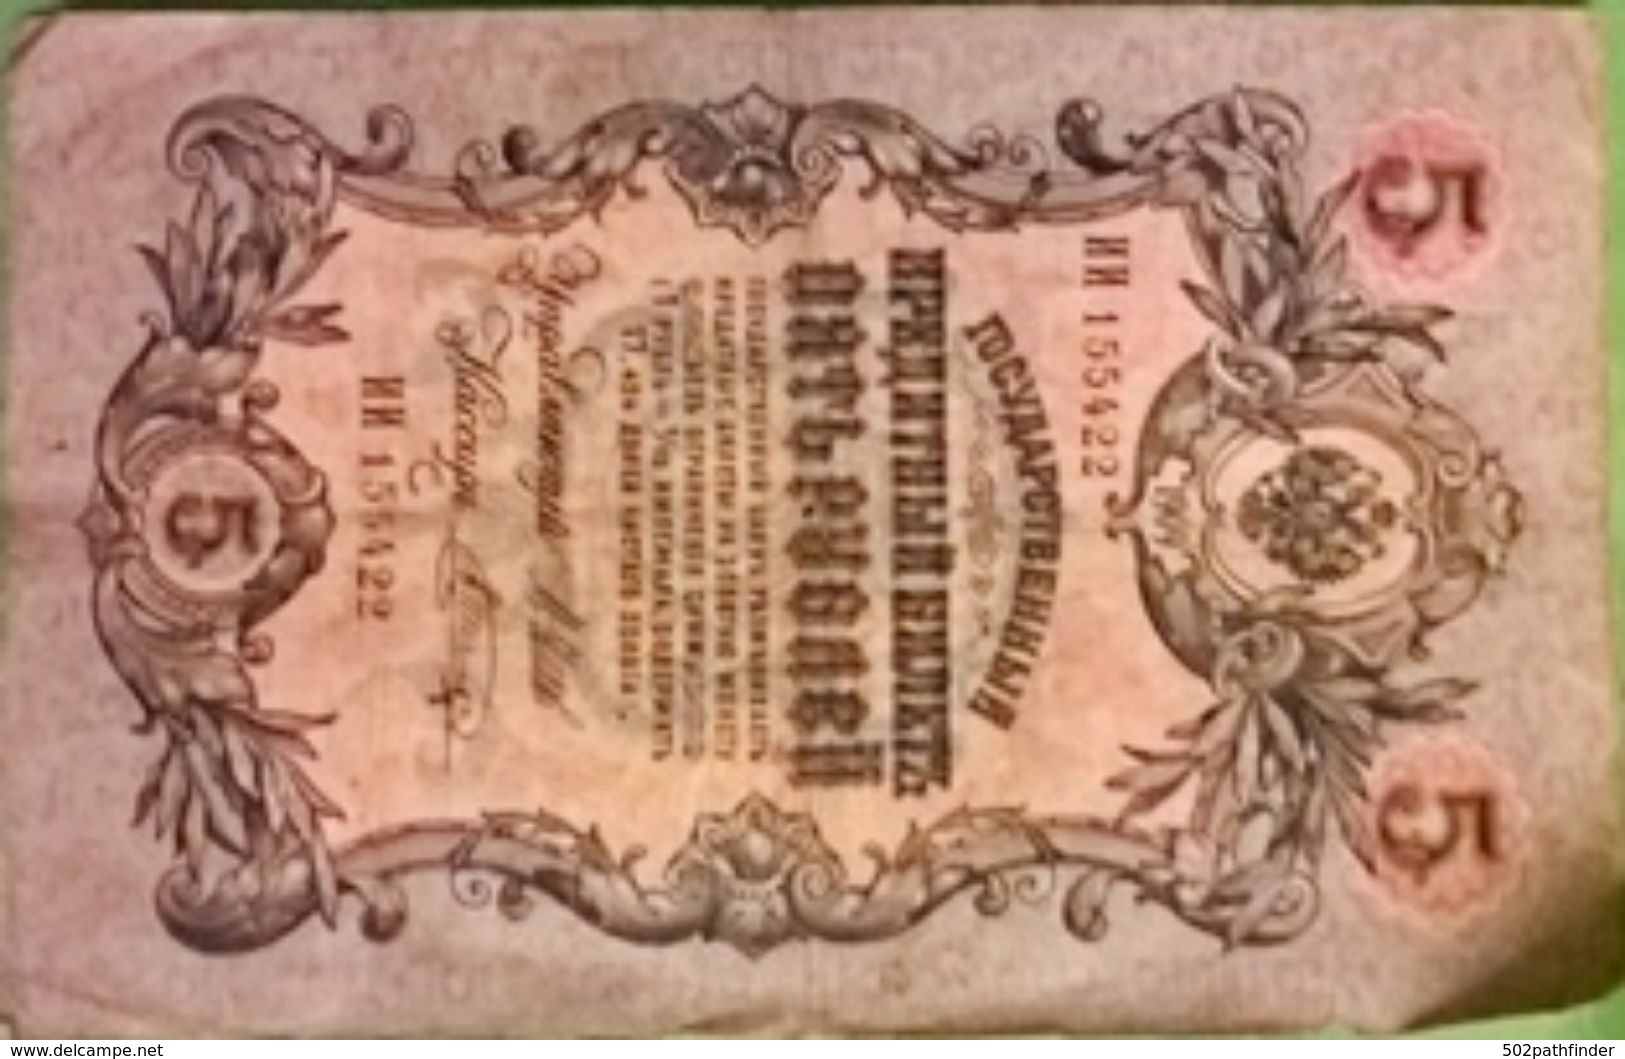 5  ROUBLE  1909 - пять рублей - I I - 155422  - Shipov - Russie